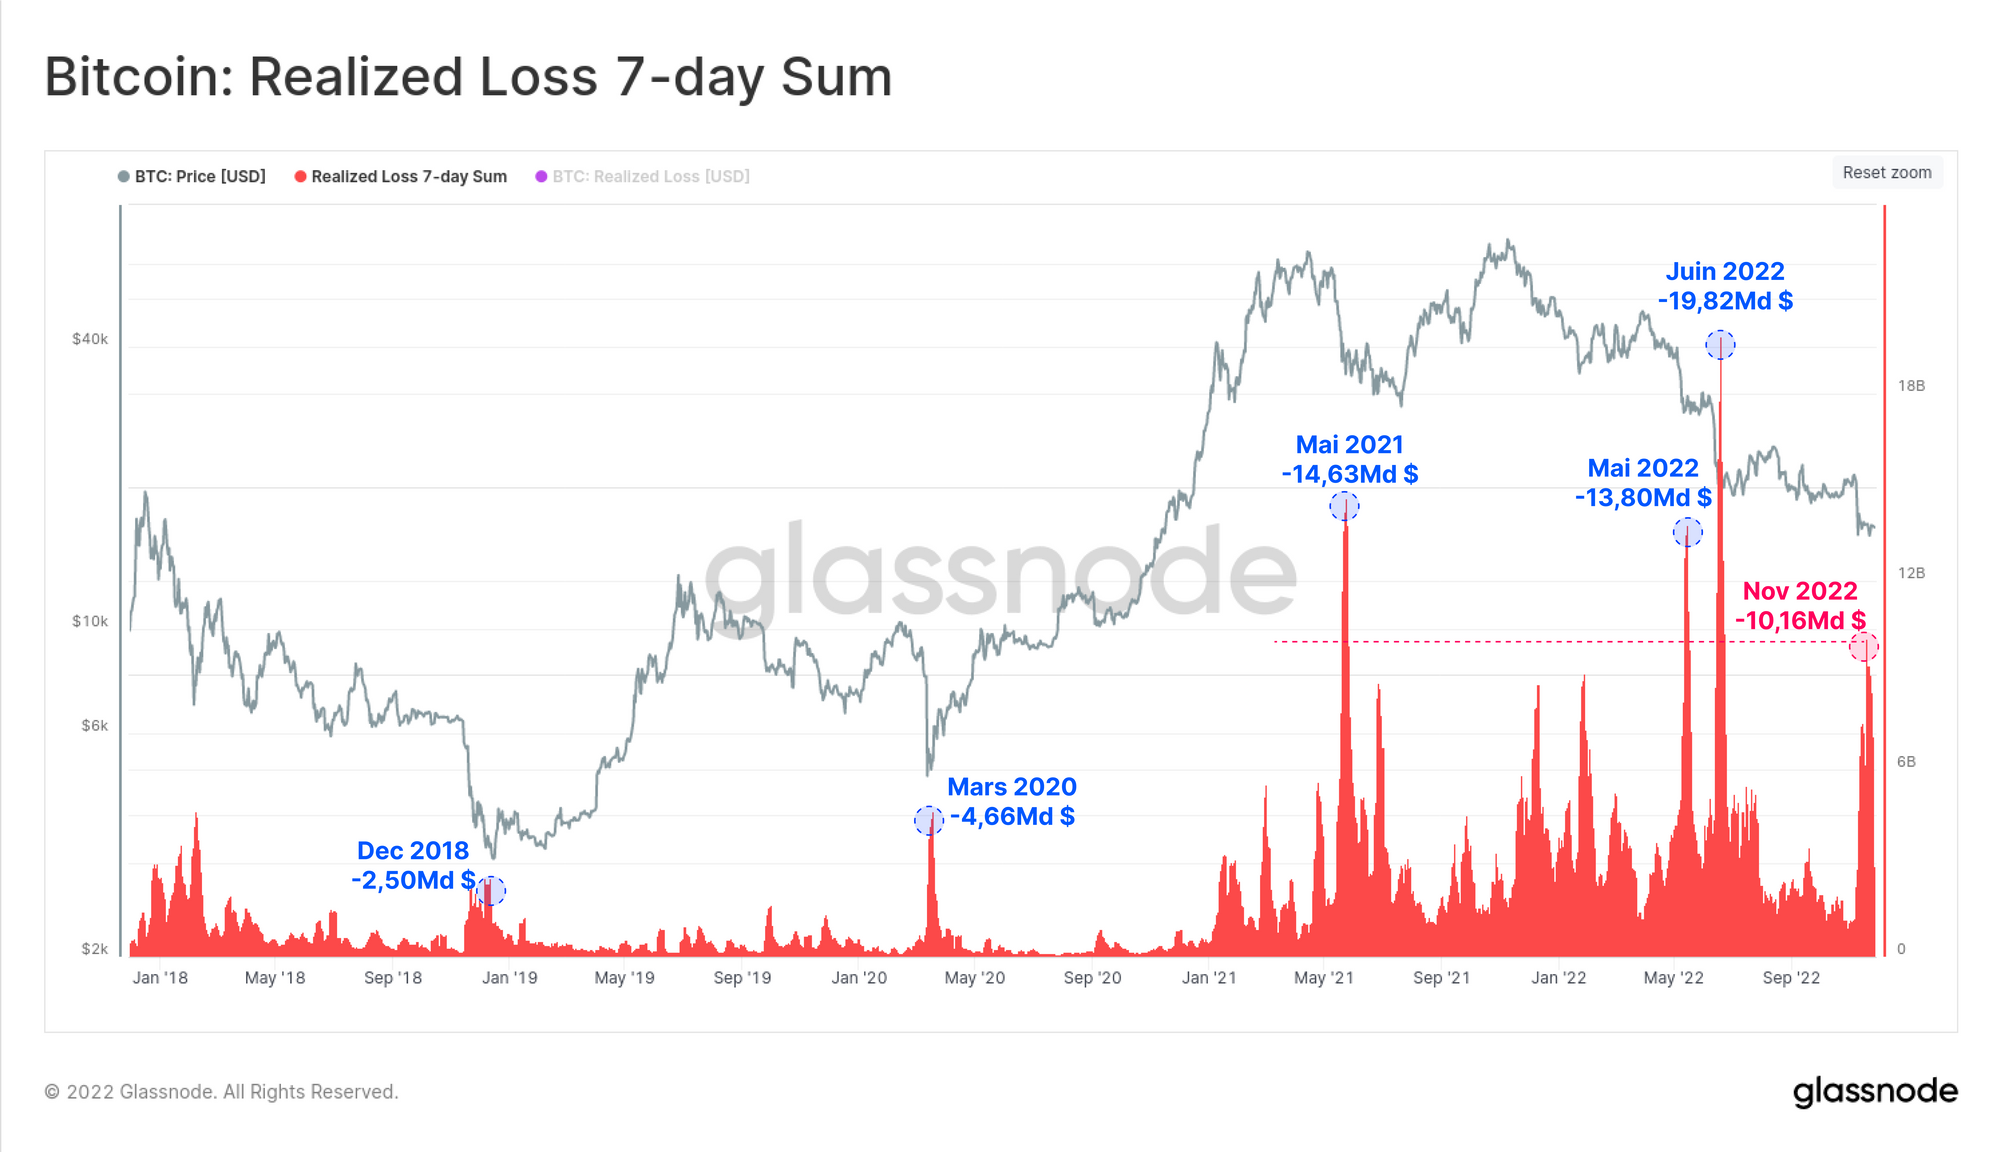 Nuages au Paradis: LVMH stock slump, by @TradingView